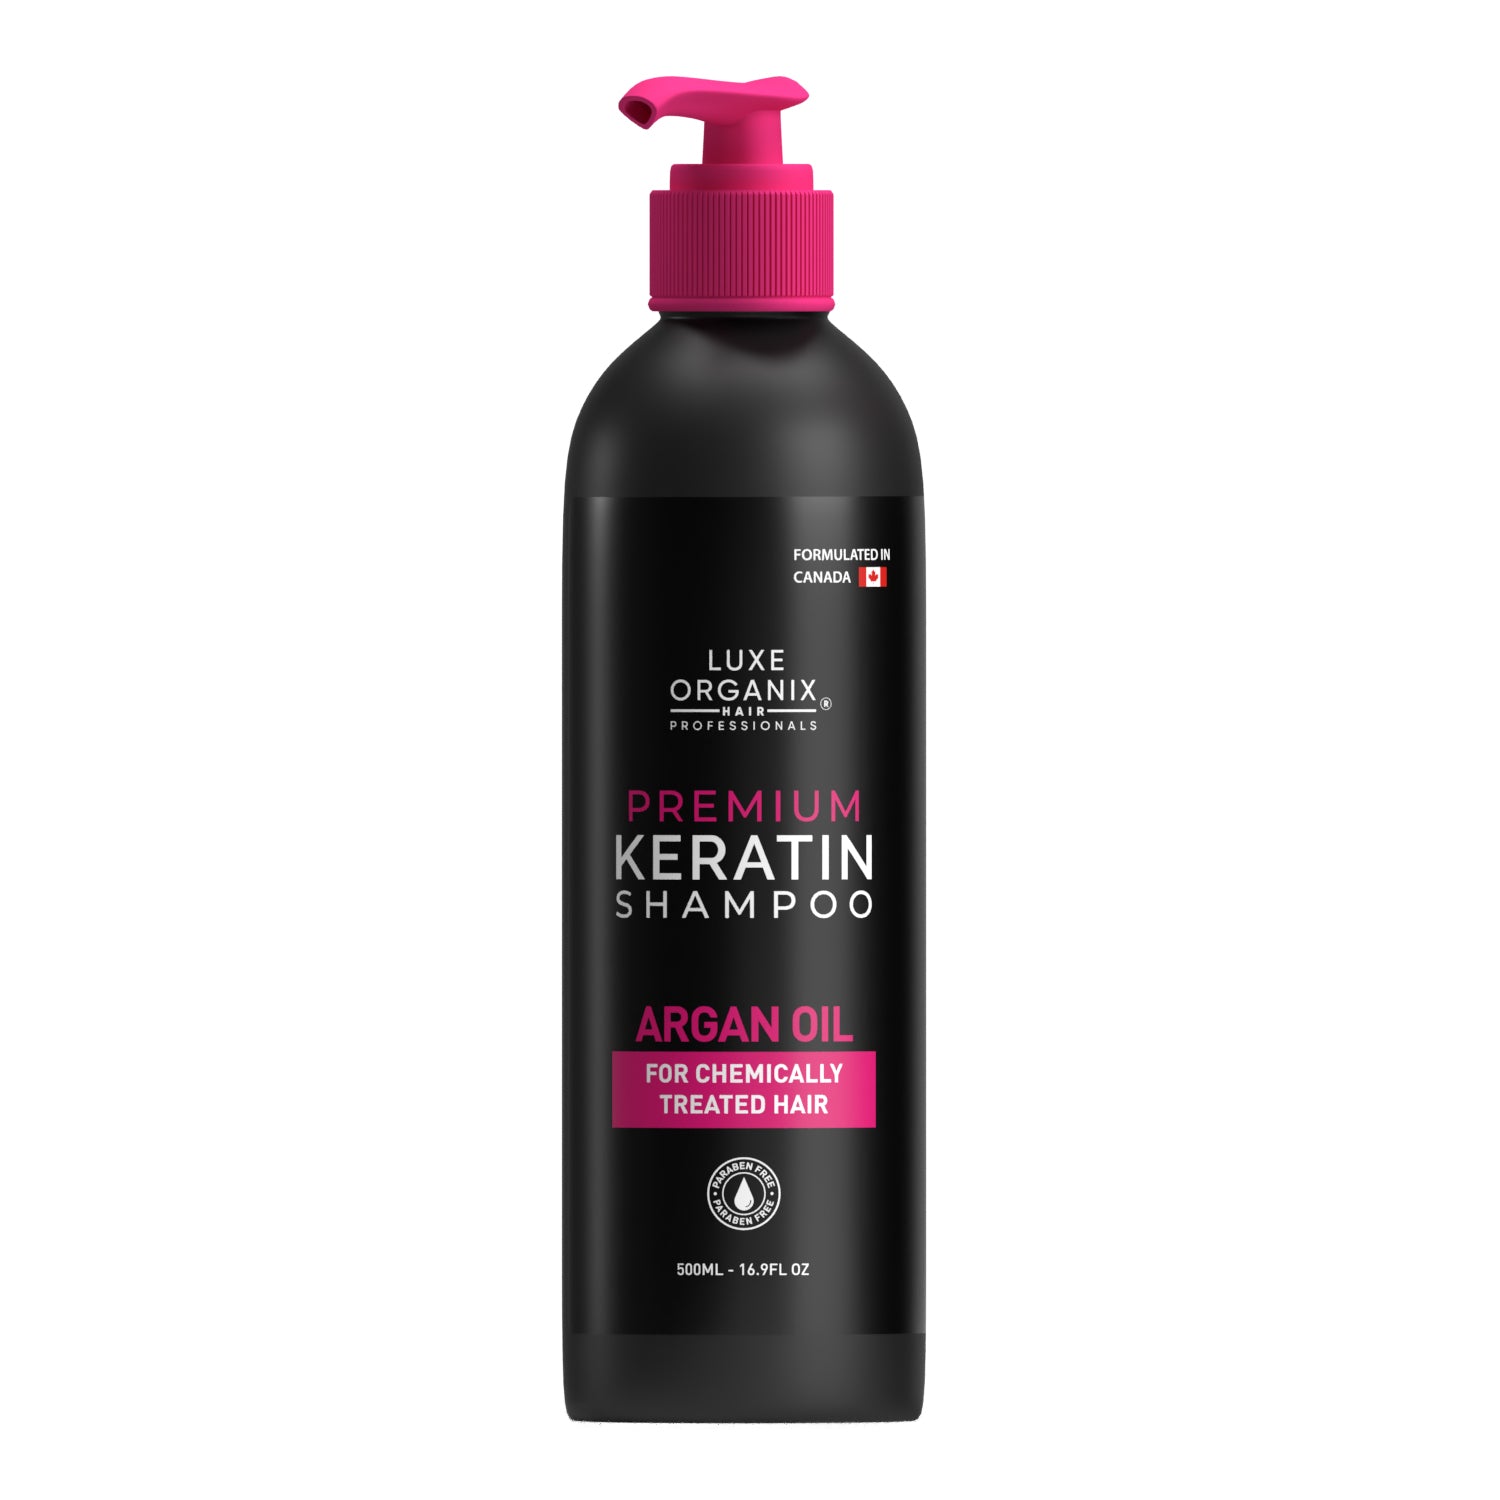 Premium Keratin Shampoo 500ml - Argan Oil